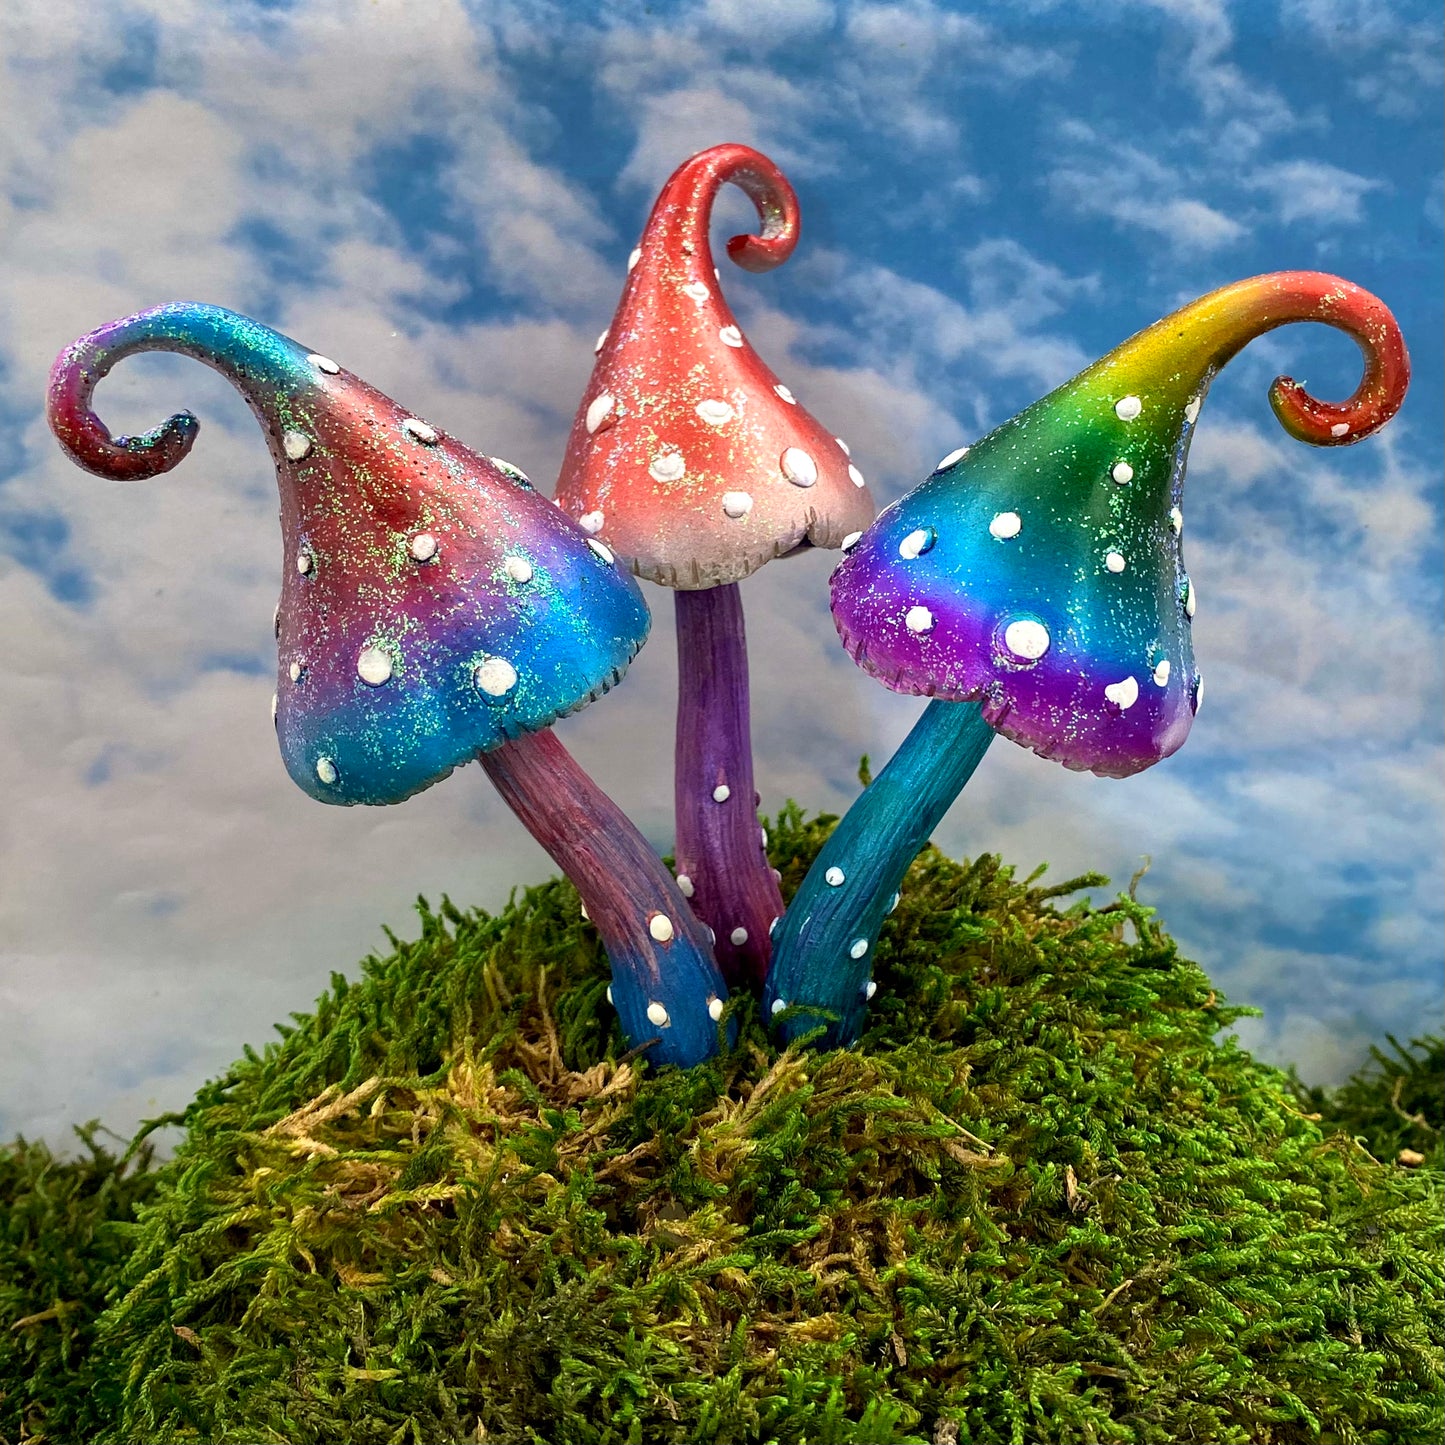 Large Whimsical Mushrooms, Australian Fairy Gardens, Mushrooms